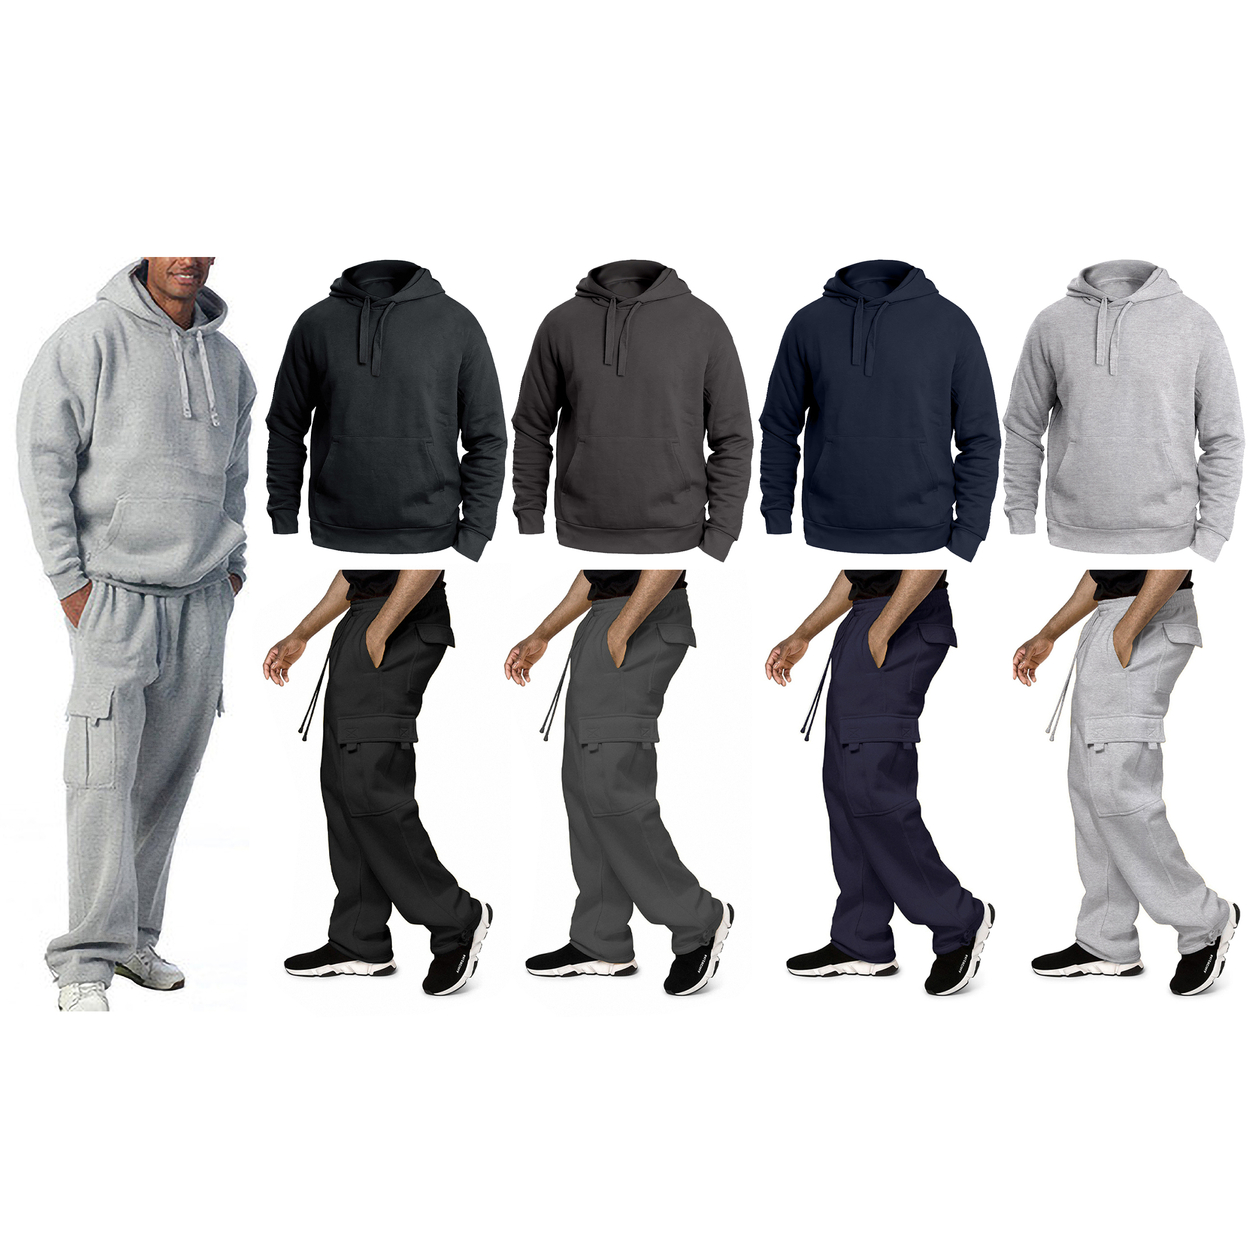 2-Pack: Men's Big & Tall Winter Warm Cozy Athletic Fleece Lined Multi-Pocket Cargo Sweatsuit - Navy, Small